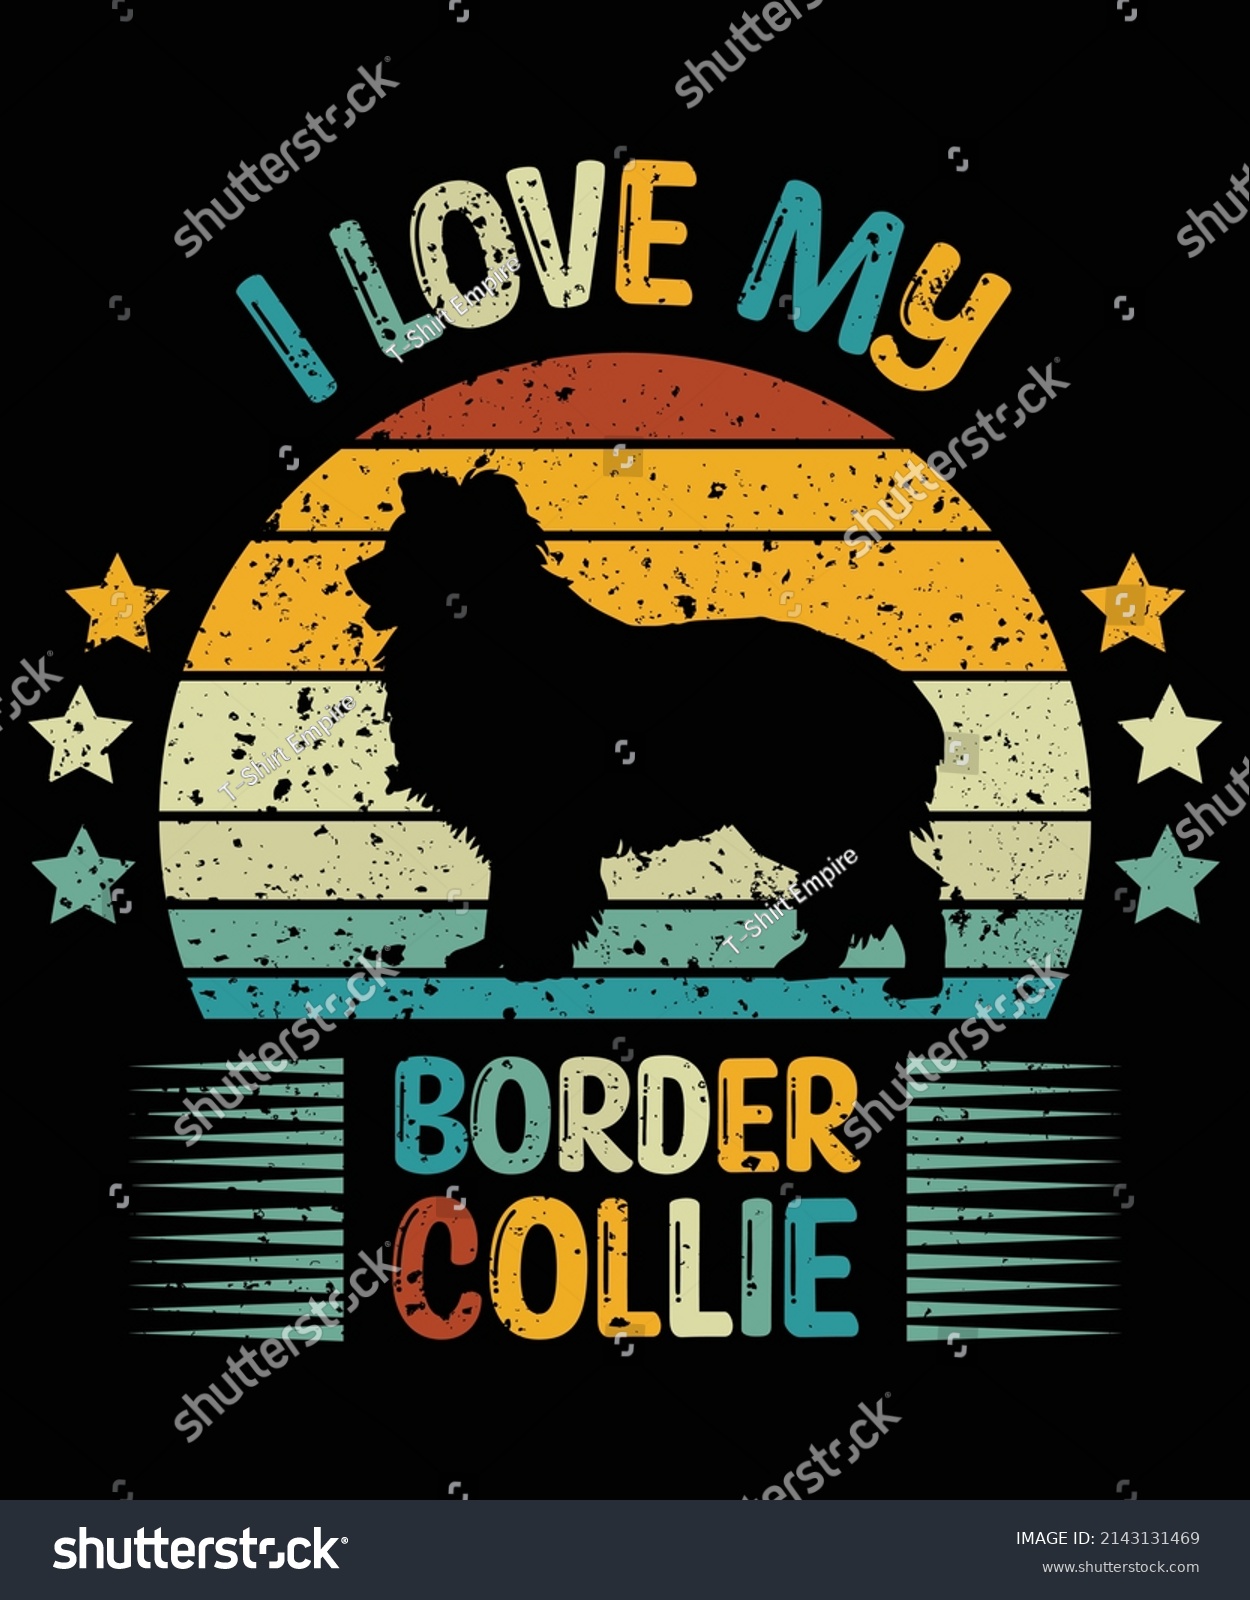 SVG of Border Collie silhouette vintage and retro t-shirt design svg